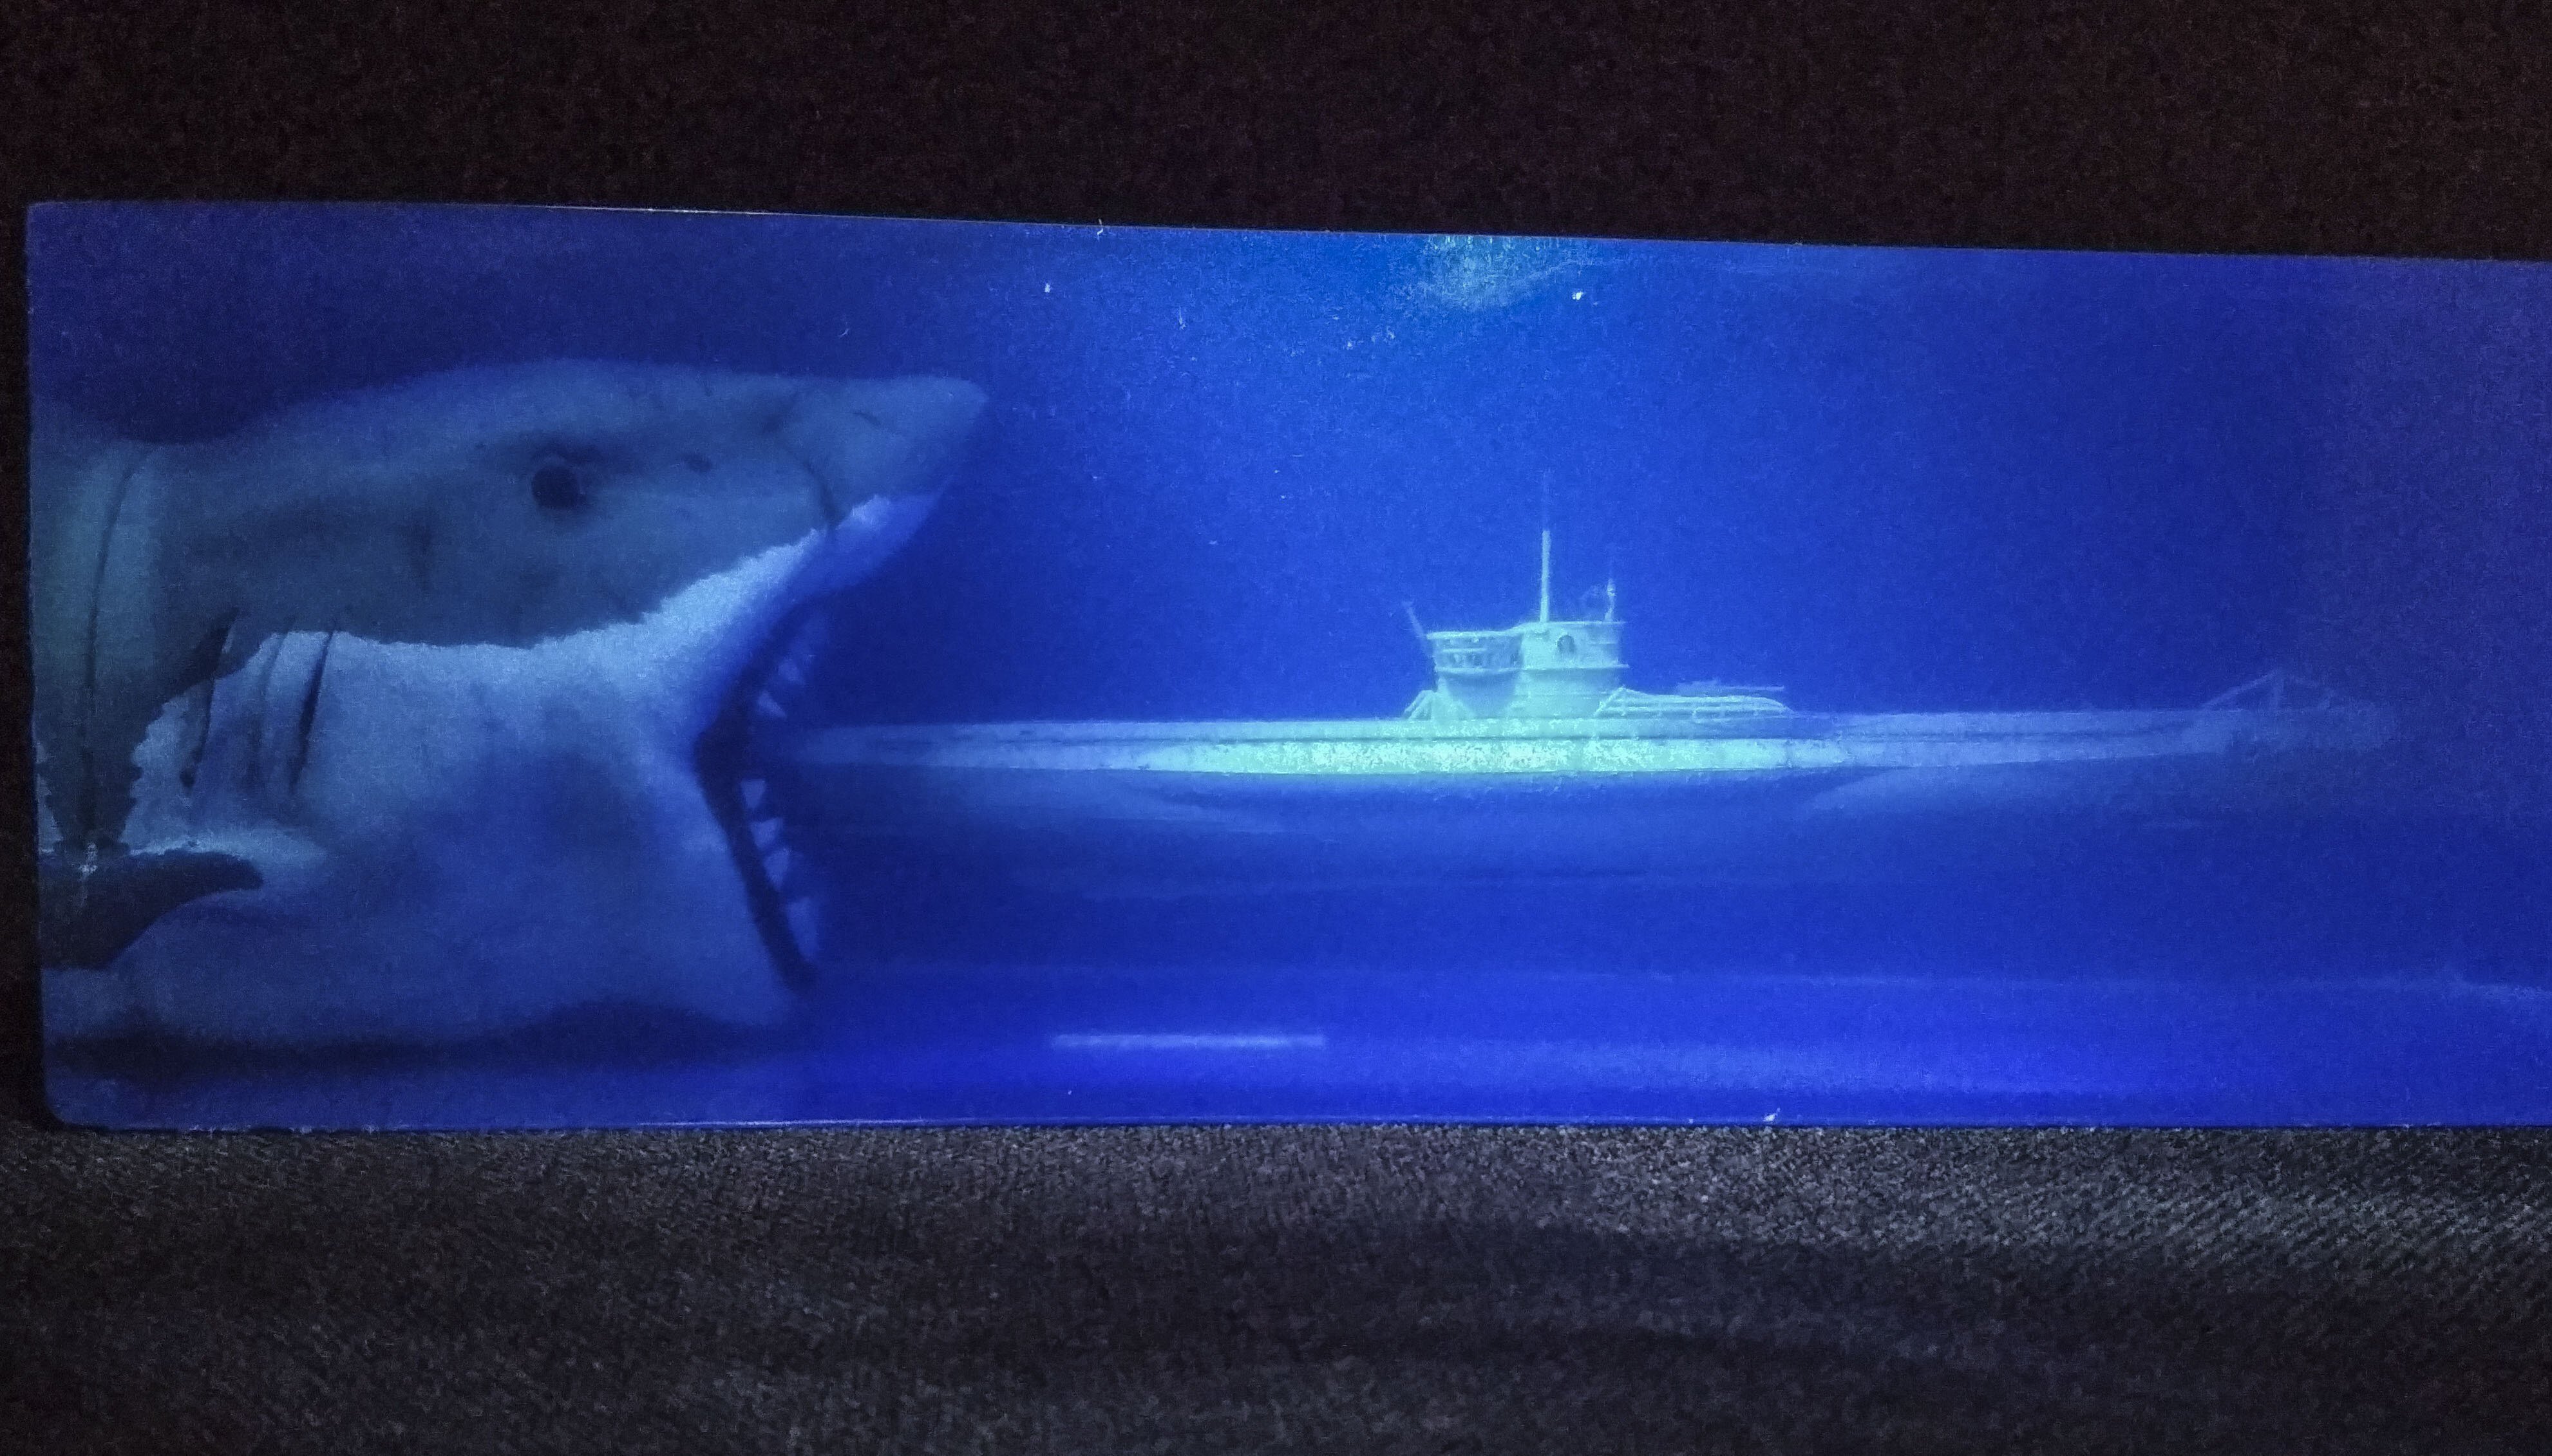 Мегалодон фото с подводной лодкой